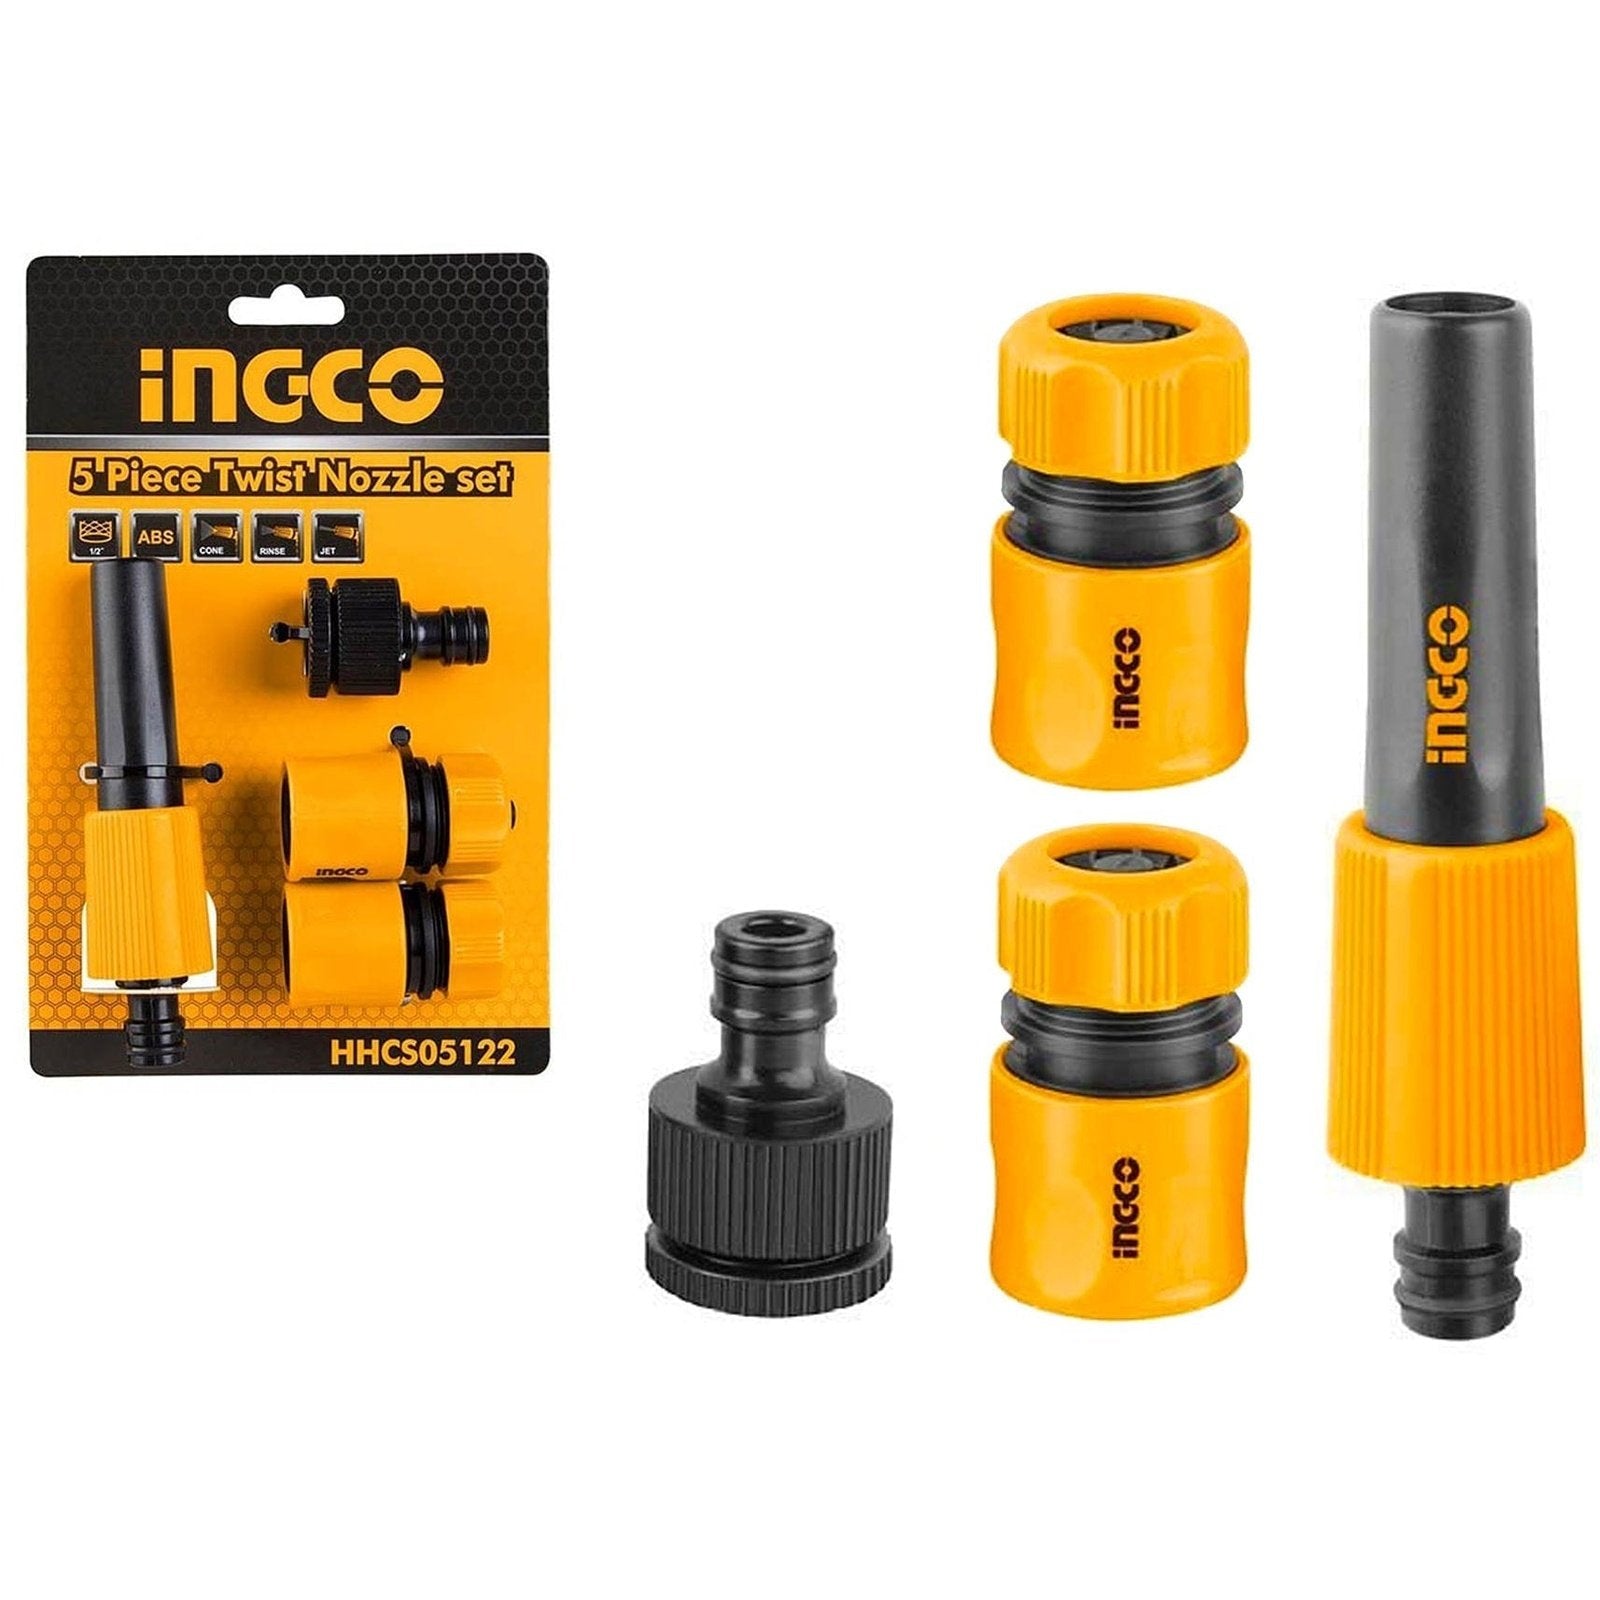 Ingco 5 Pieces Twist Nozzle Set HHCS05122 | Supply Master Accra, Ghana Chuck Keys & Specialty Accessories Buy Tools hardware Building materials